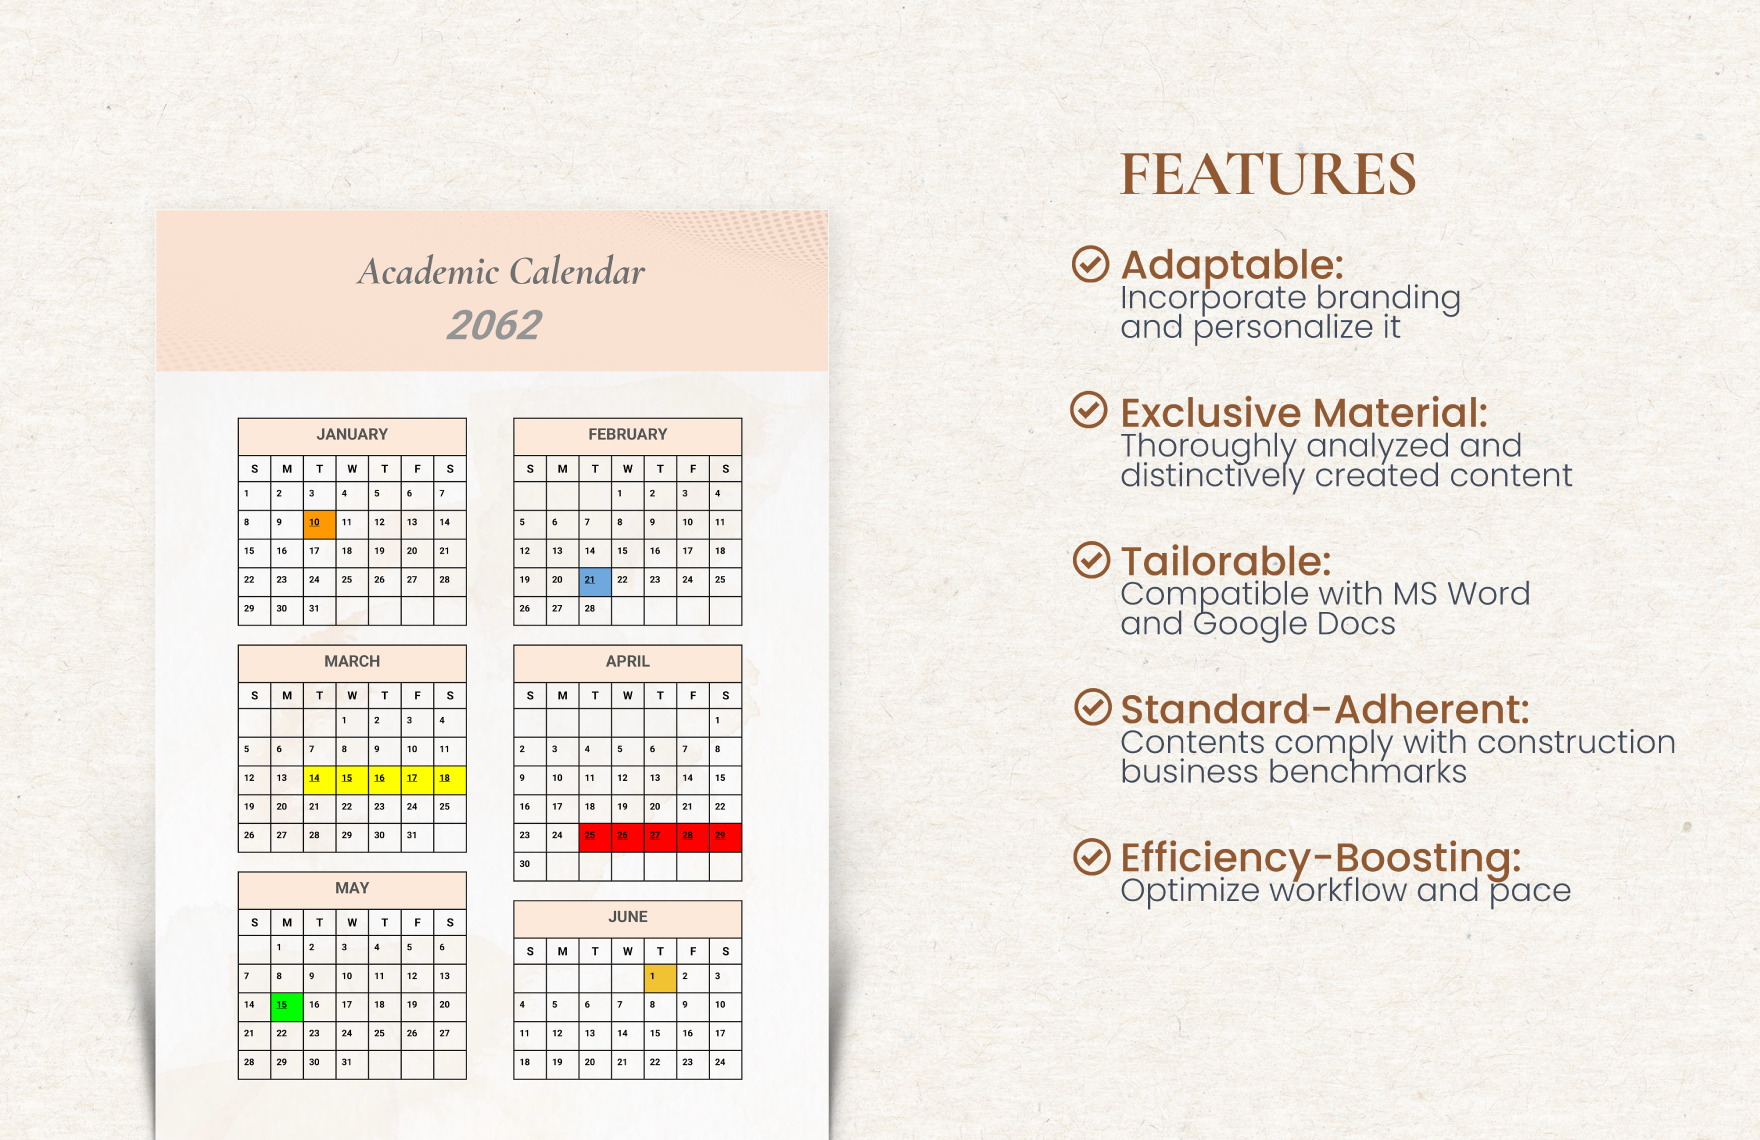 Academic Calendar Template